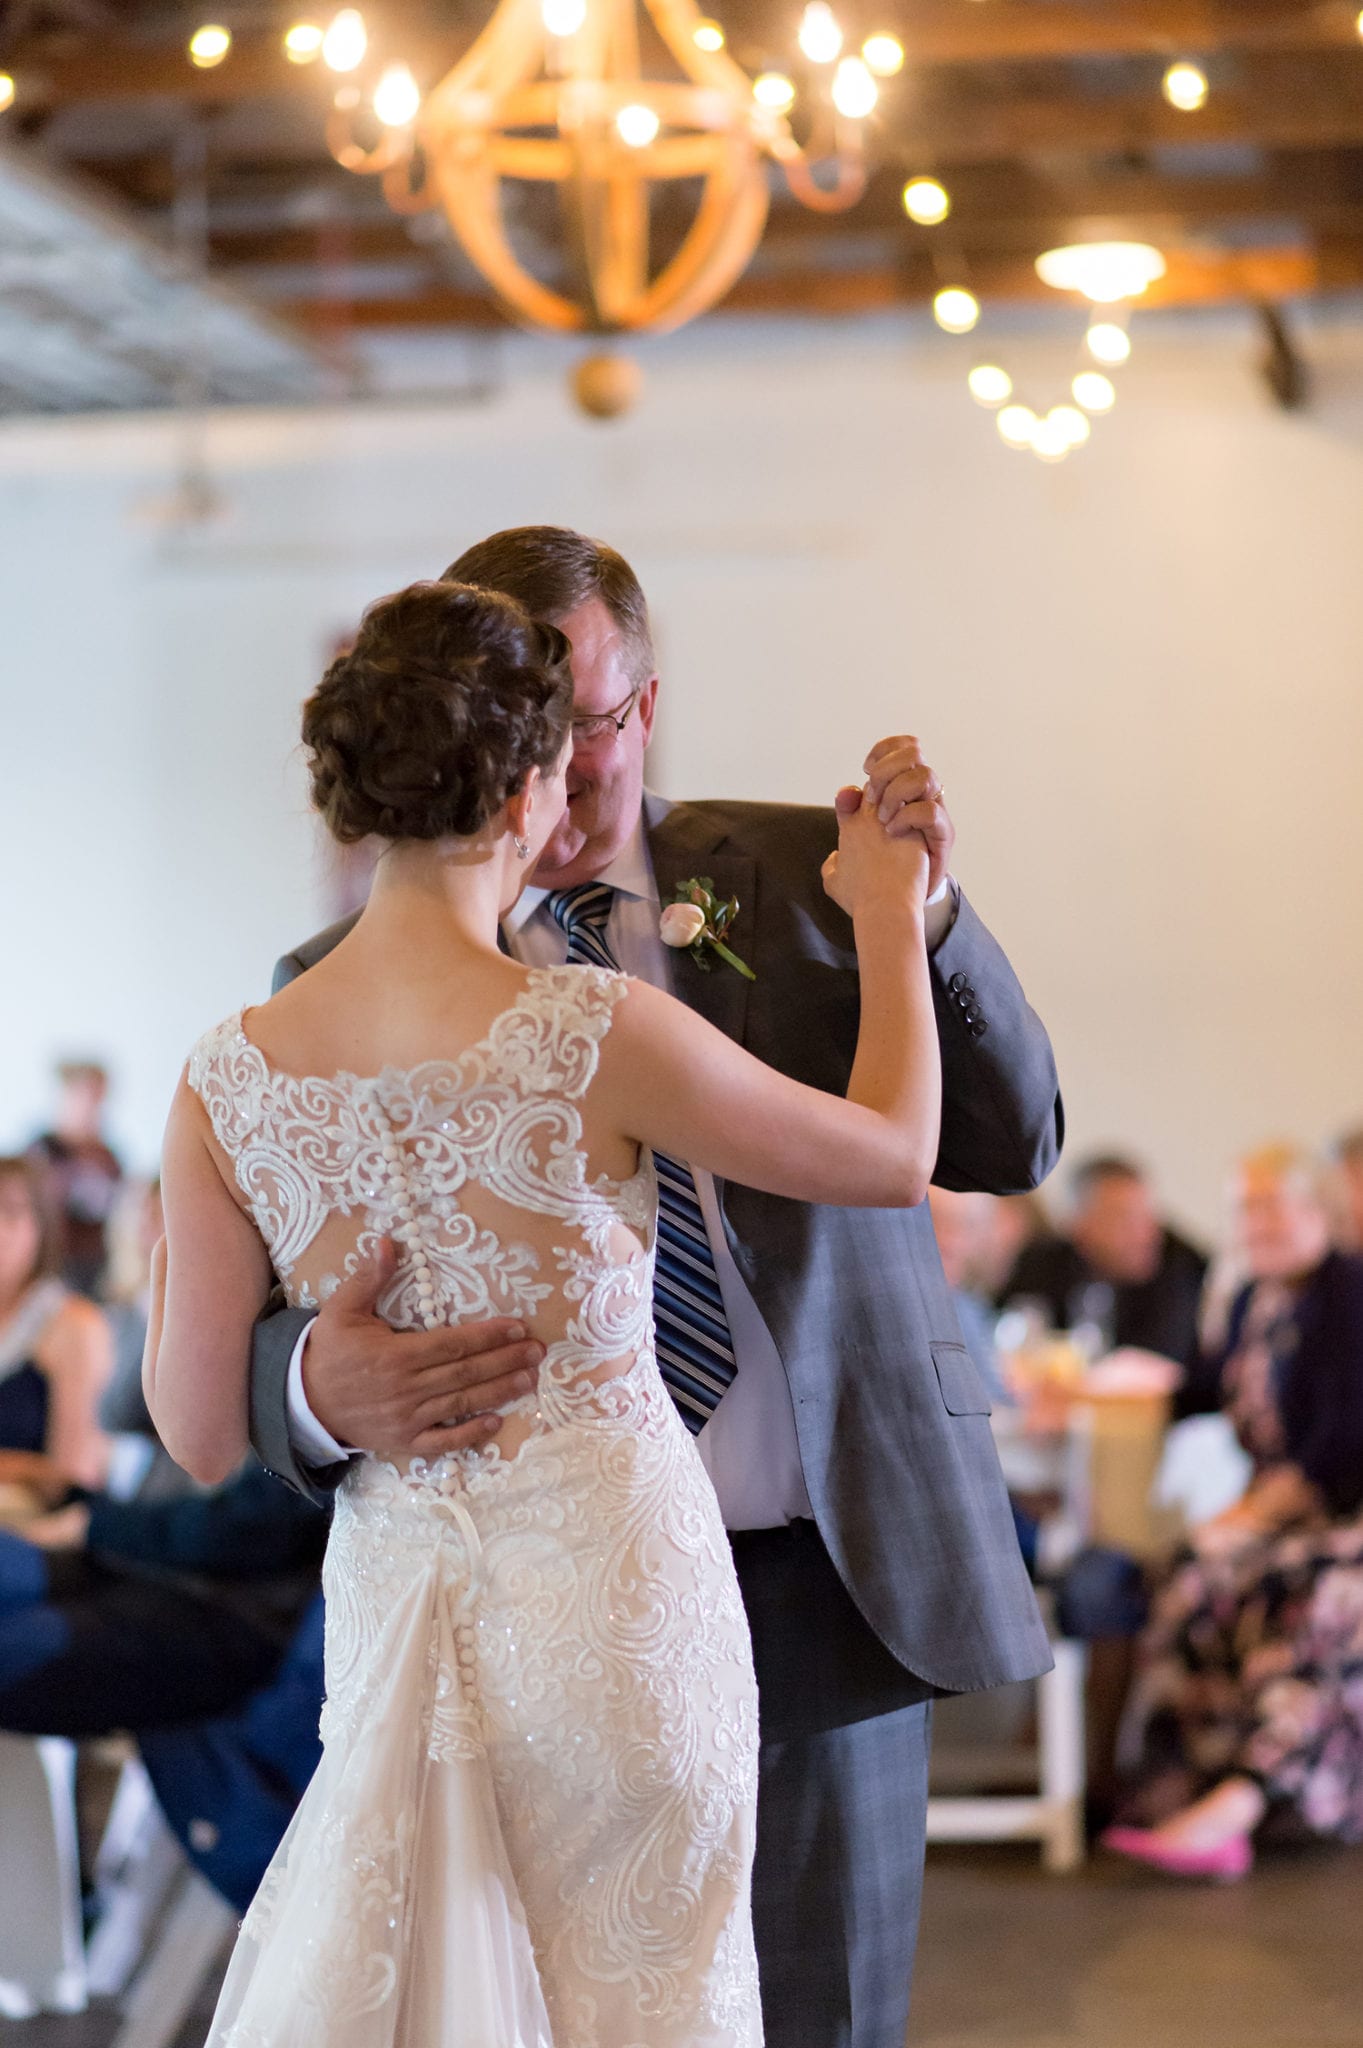 Father/daughter dance at Maplehurst Farm wedding venue